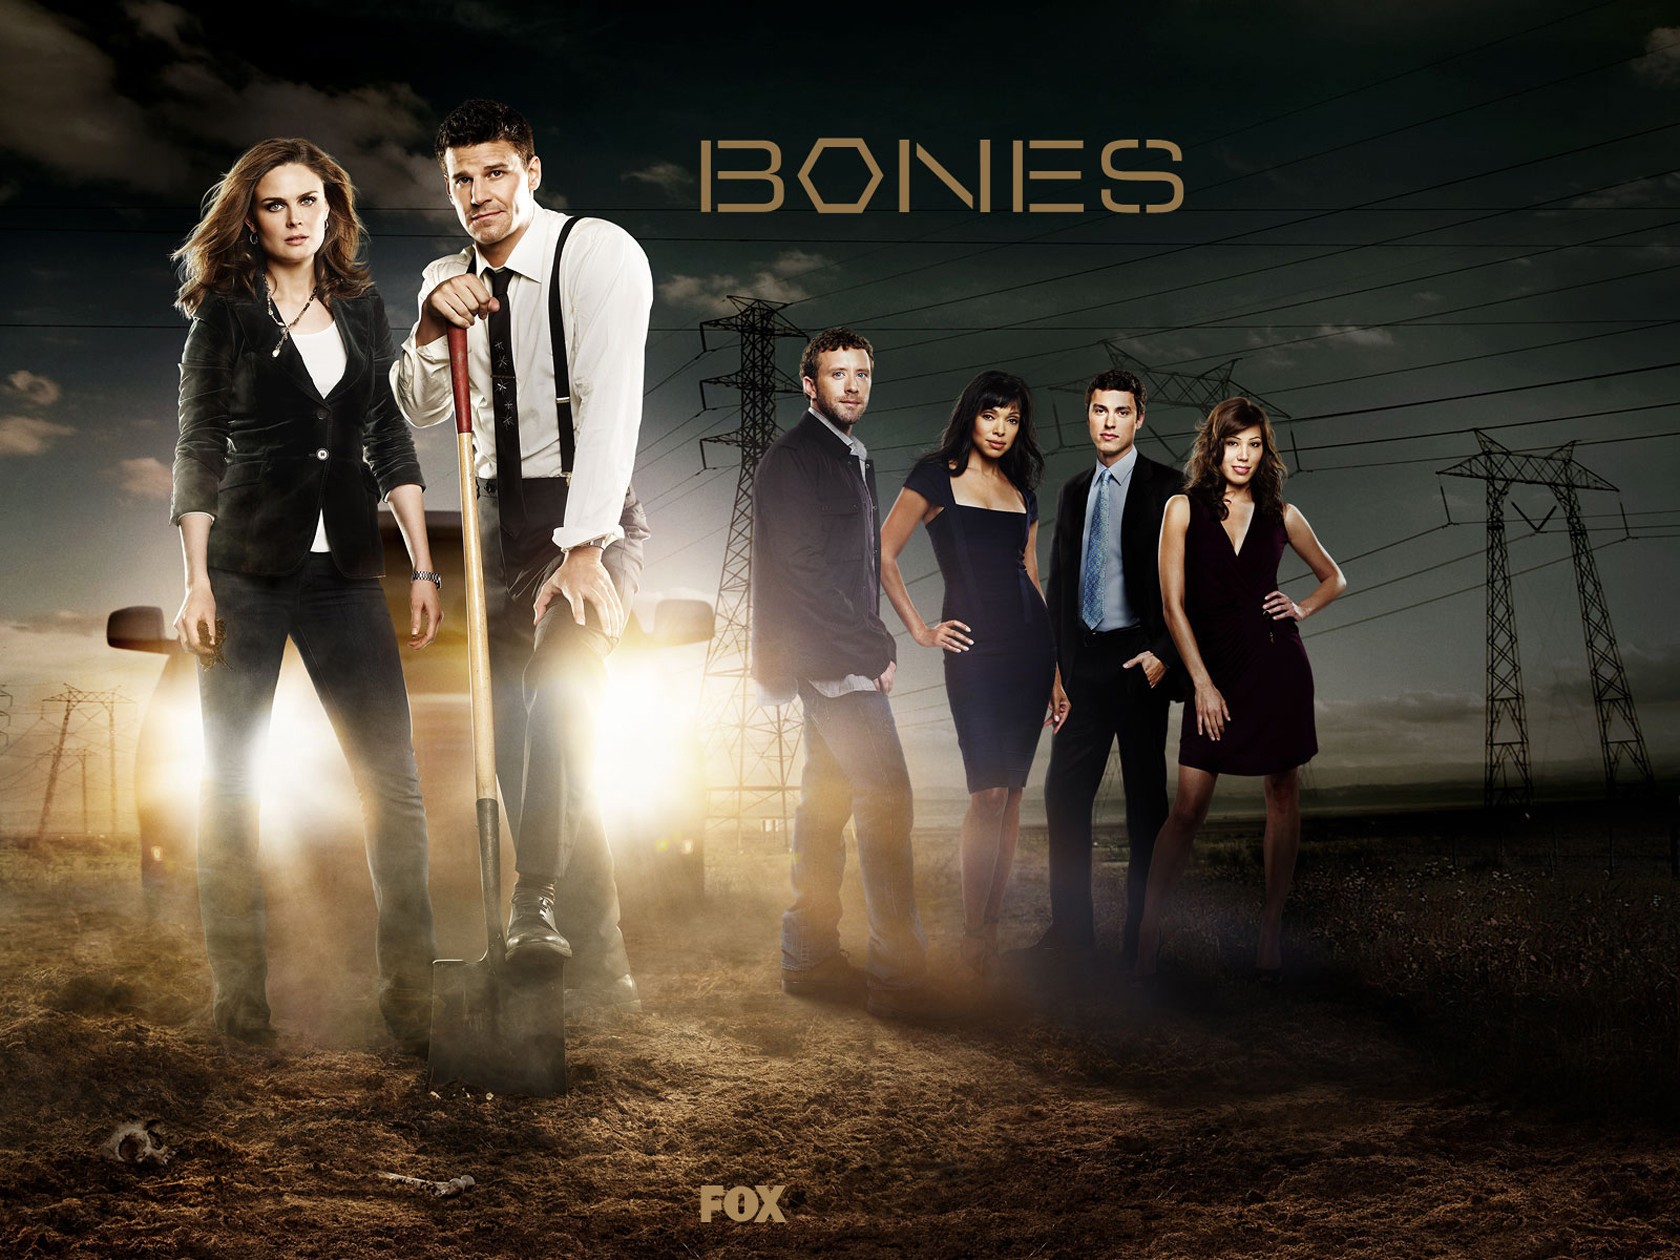 Bones 9. Bones кости. Kostiy seryal.